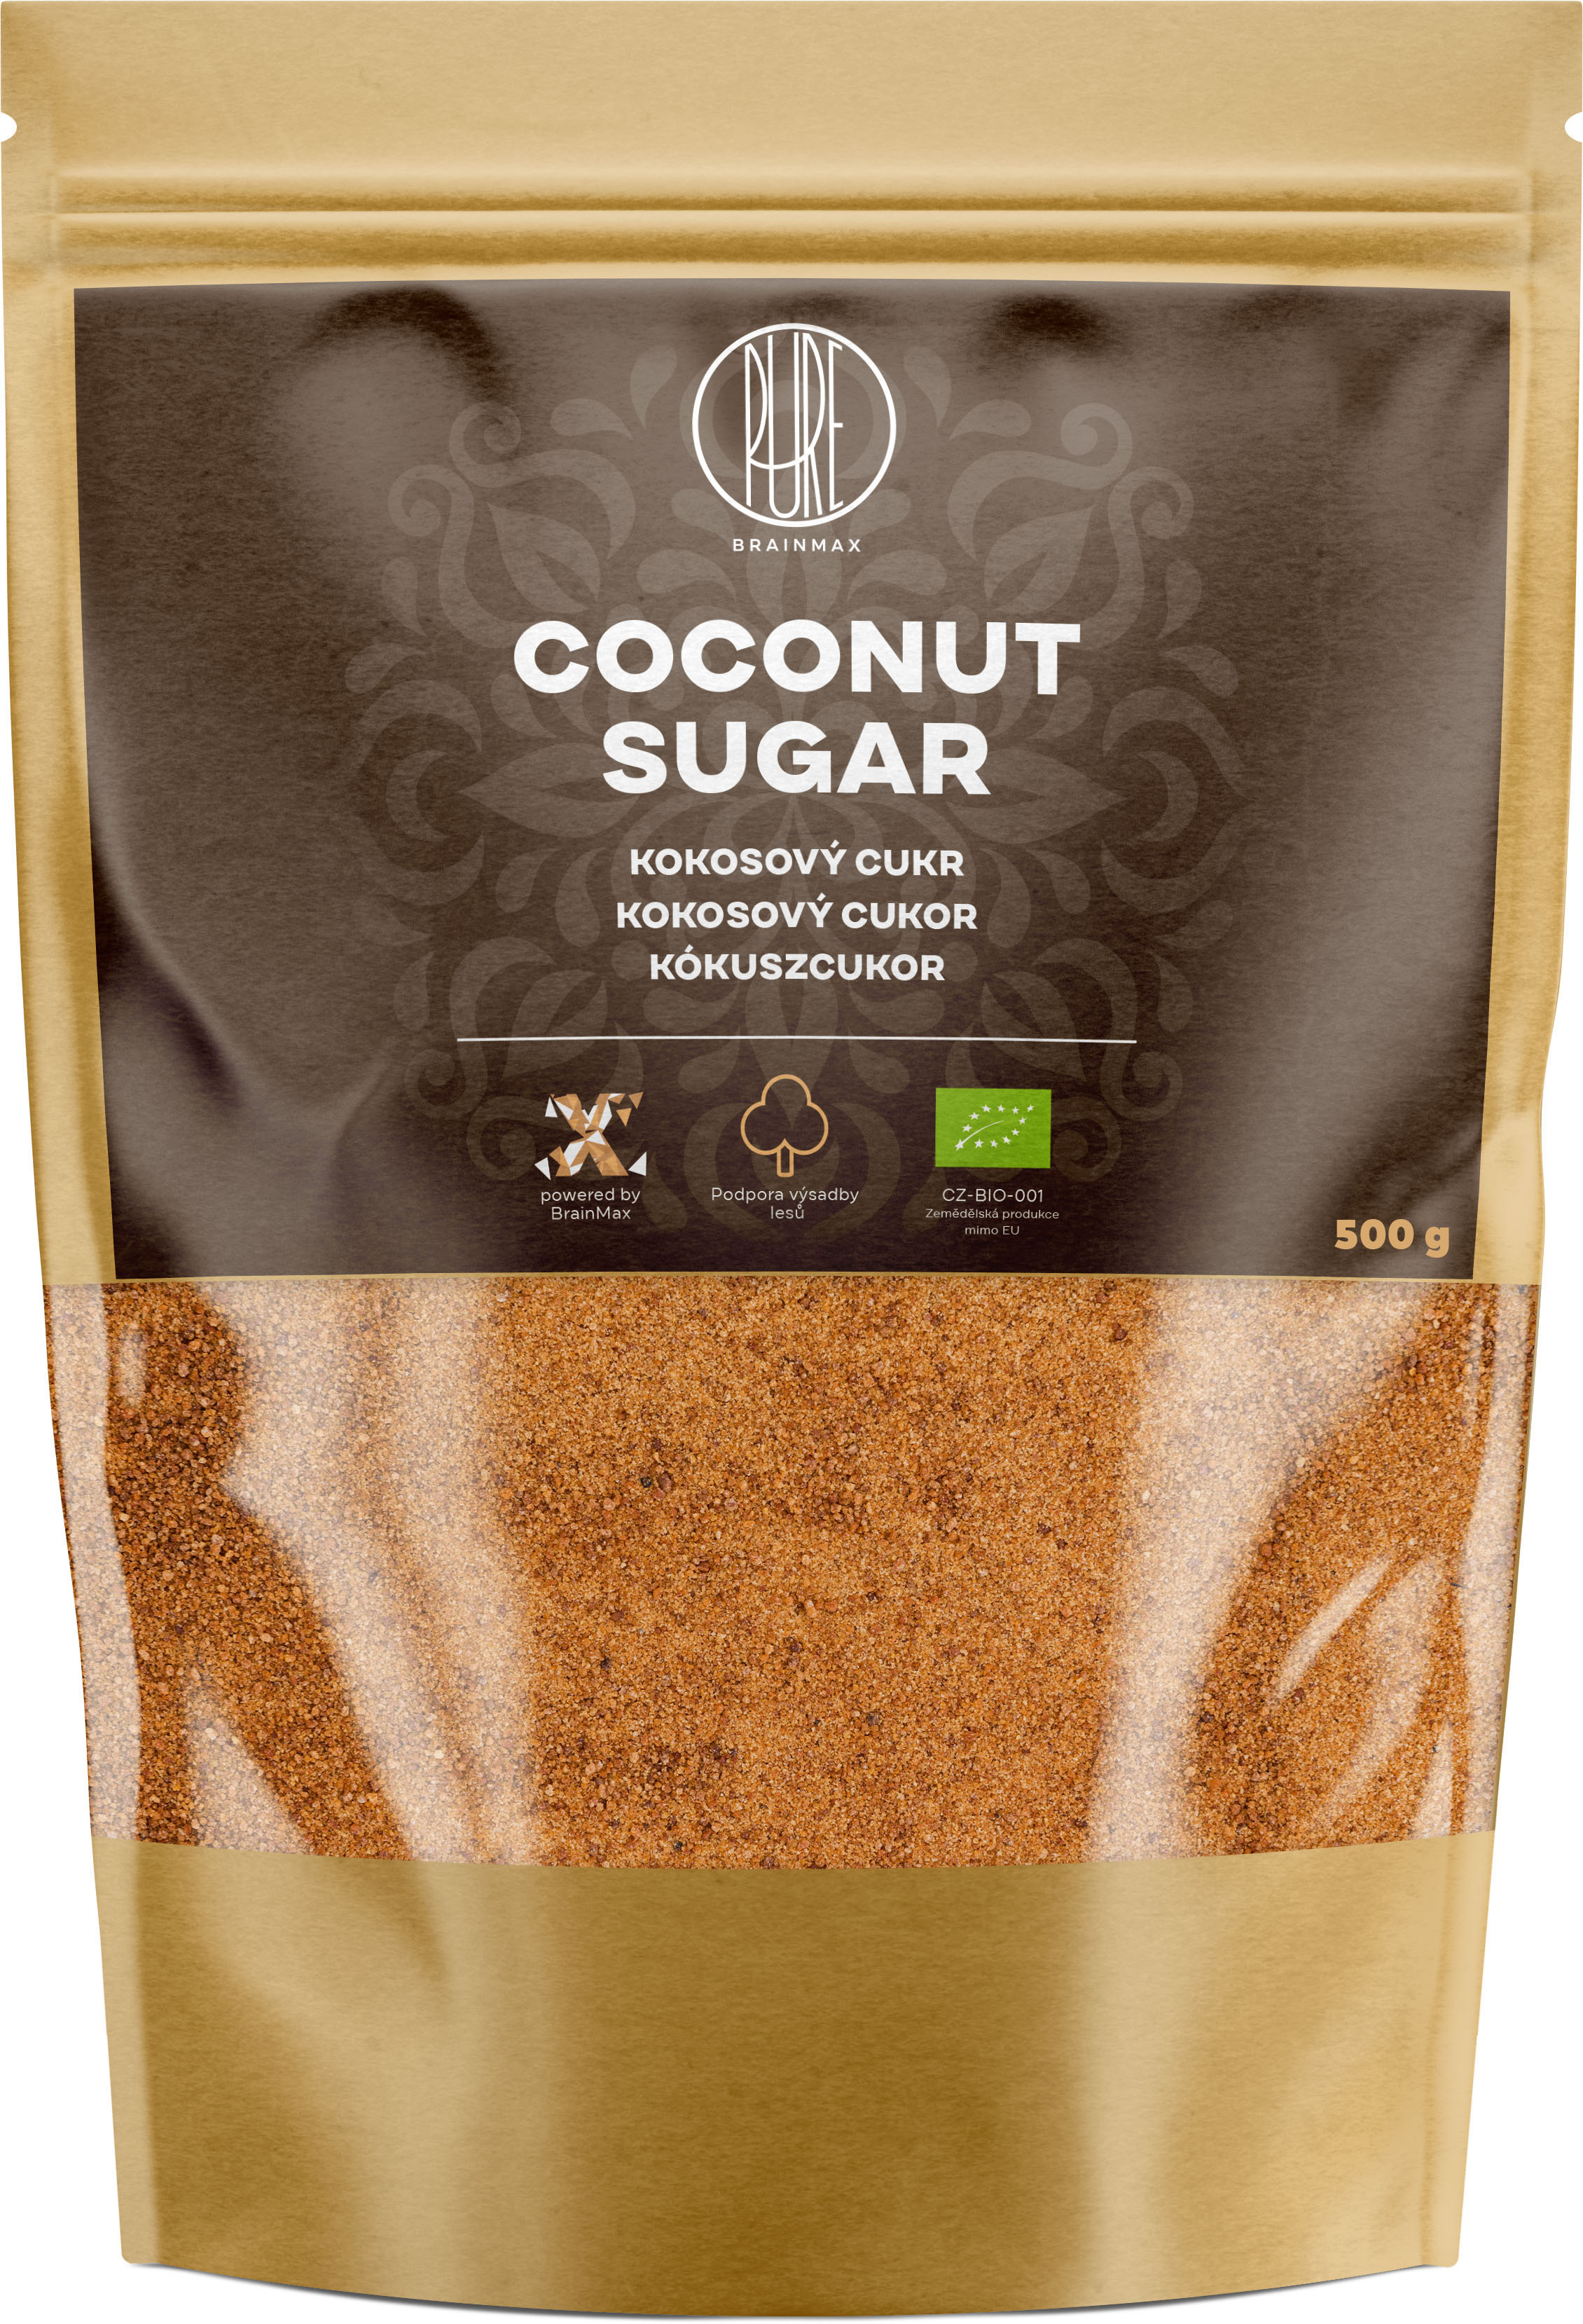 BrainMax Pure Coconut Sugar, Kokosový cukr BIO, 500 g *CZ-BIO-001 certifikát